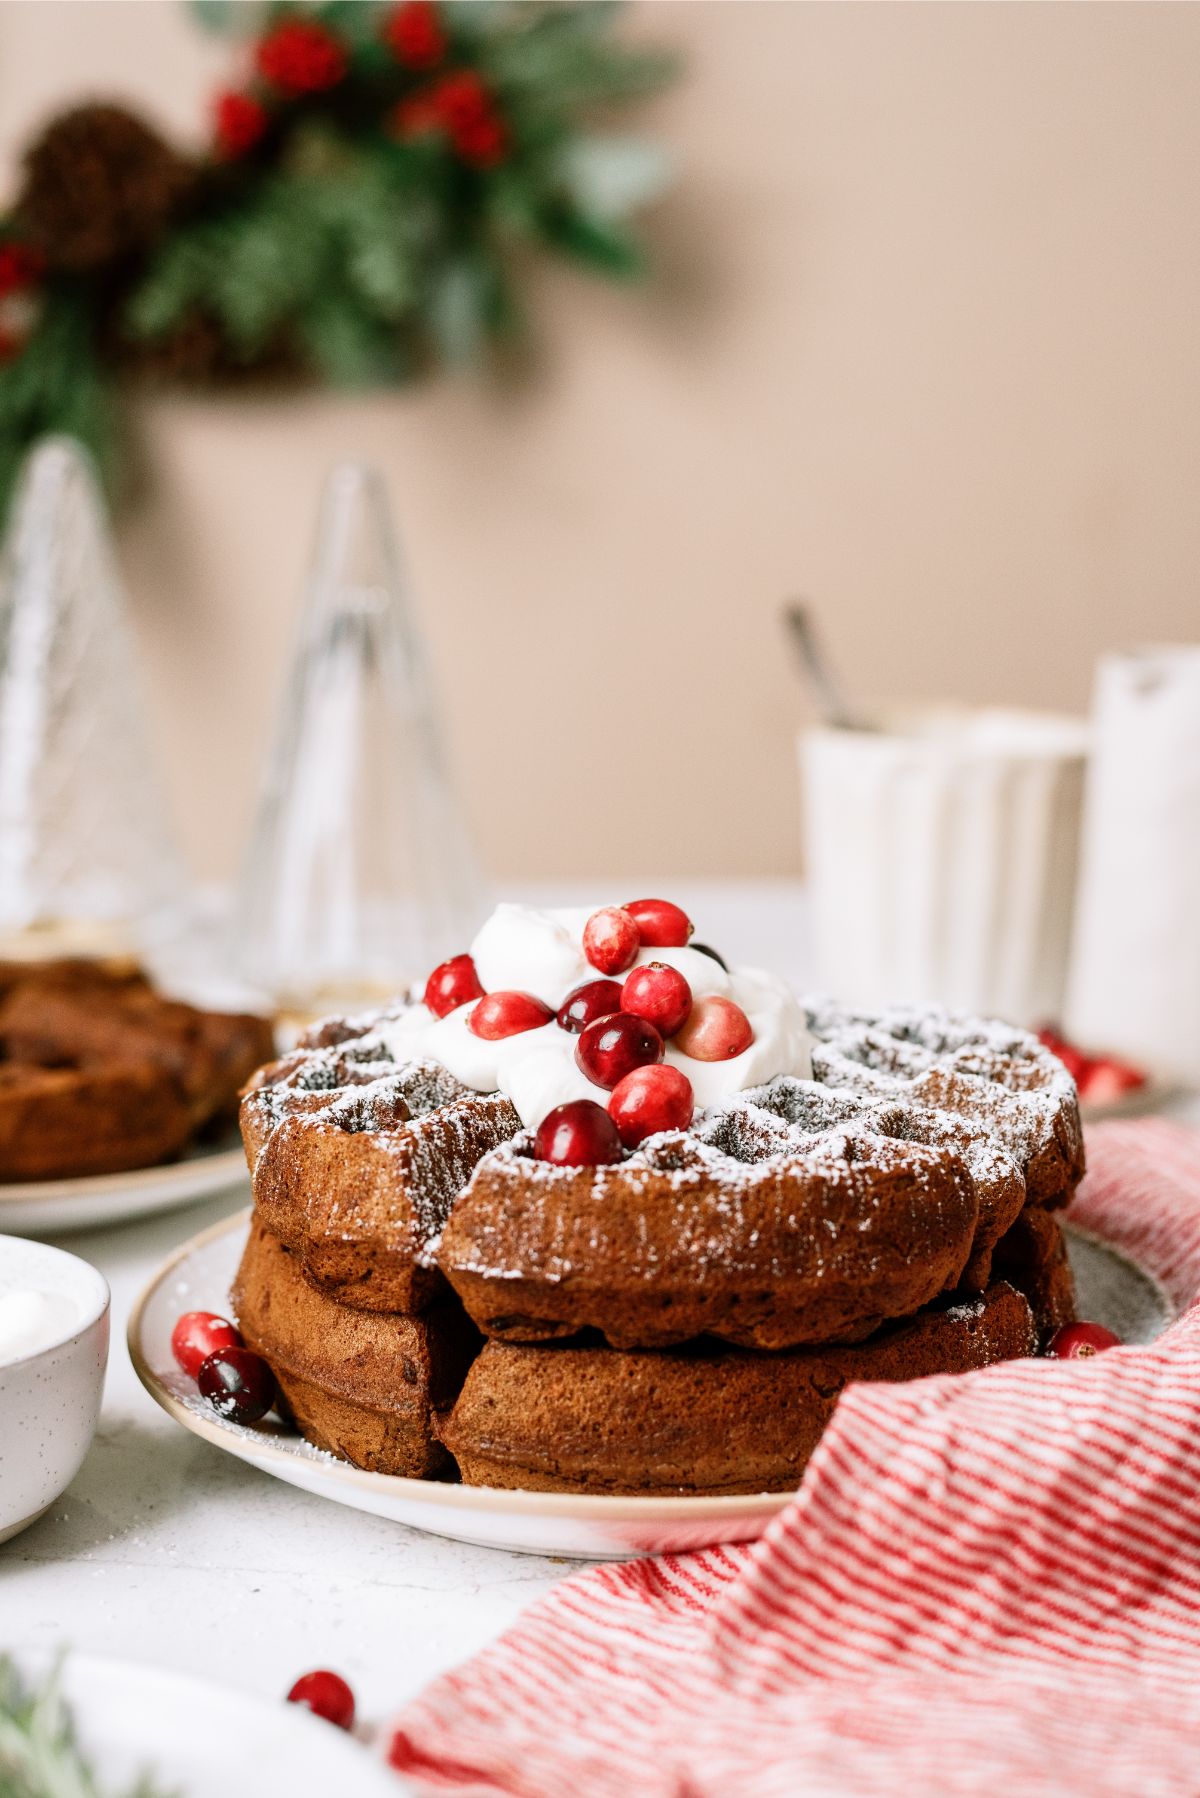 https://www.sixsistersstuff.com/wp-content/uploads/2014/12/Gingerbread-Waffles.jpg